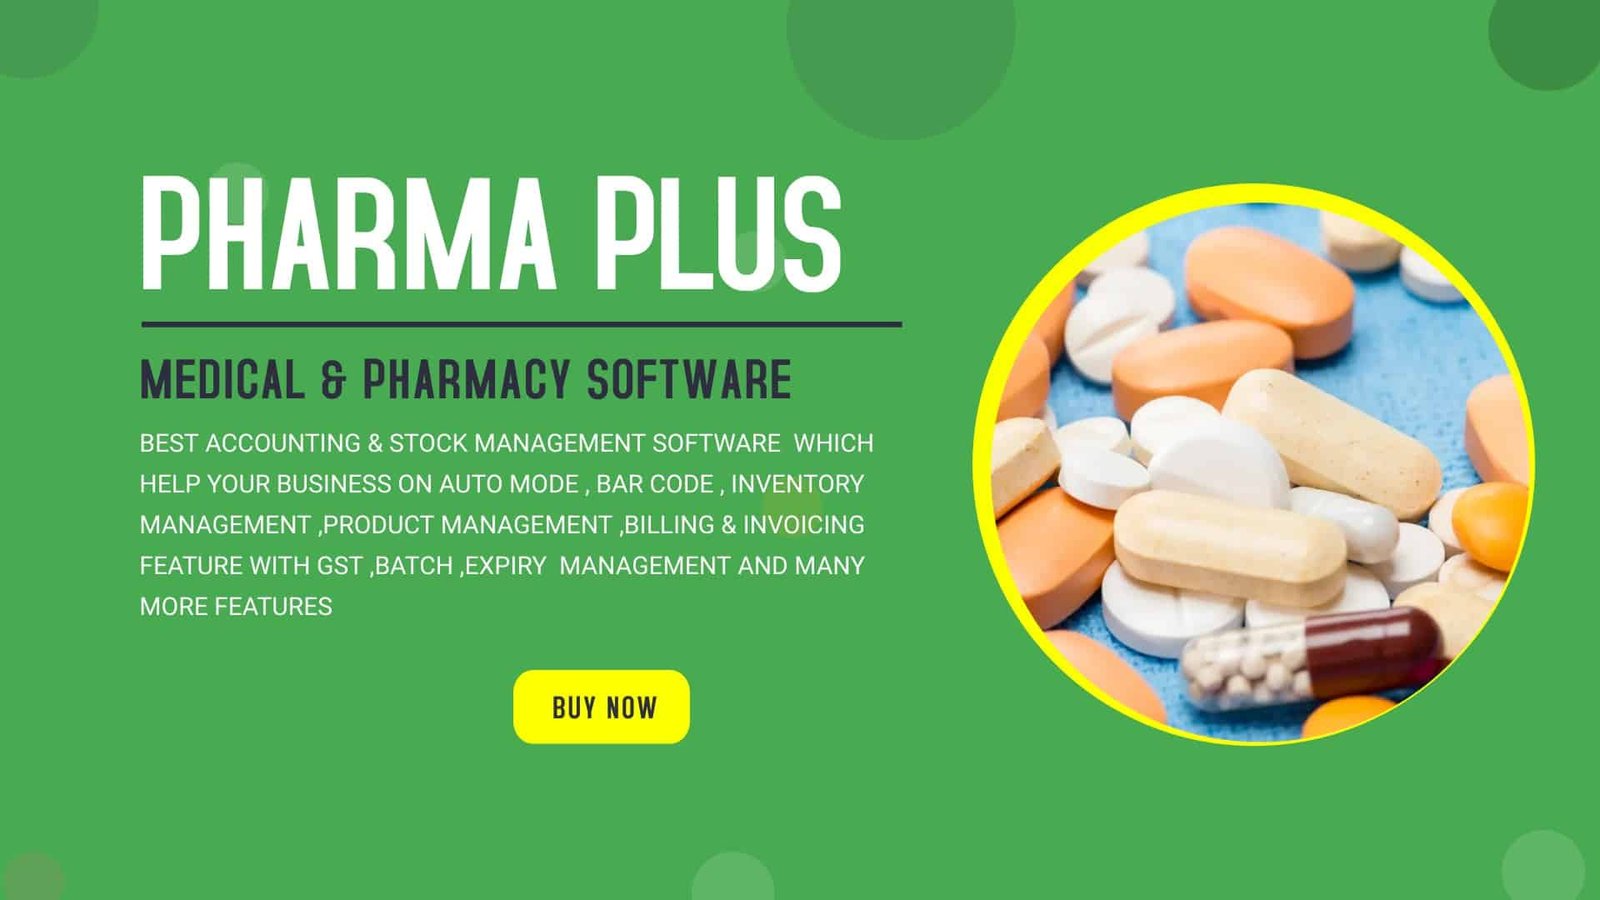 pharma plus medical software